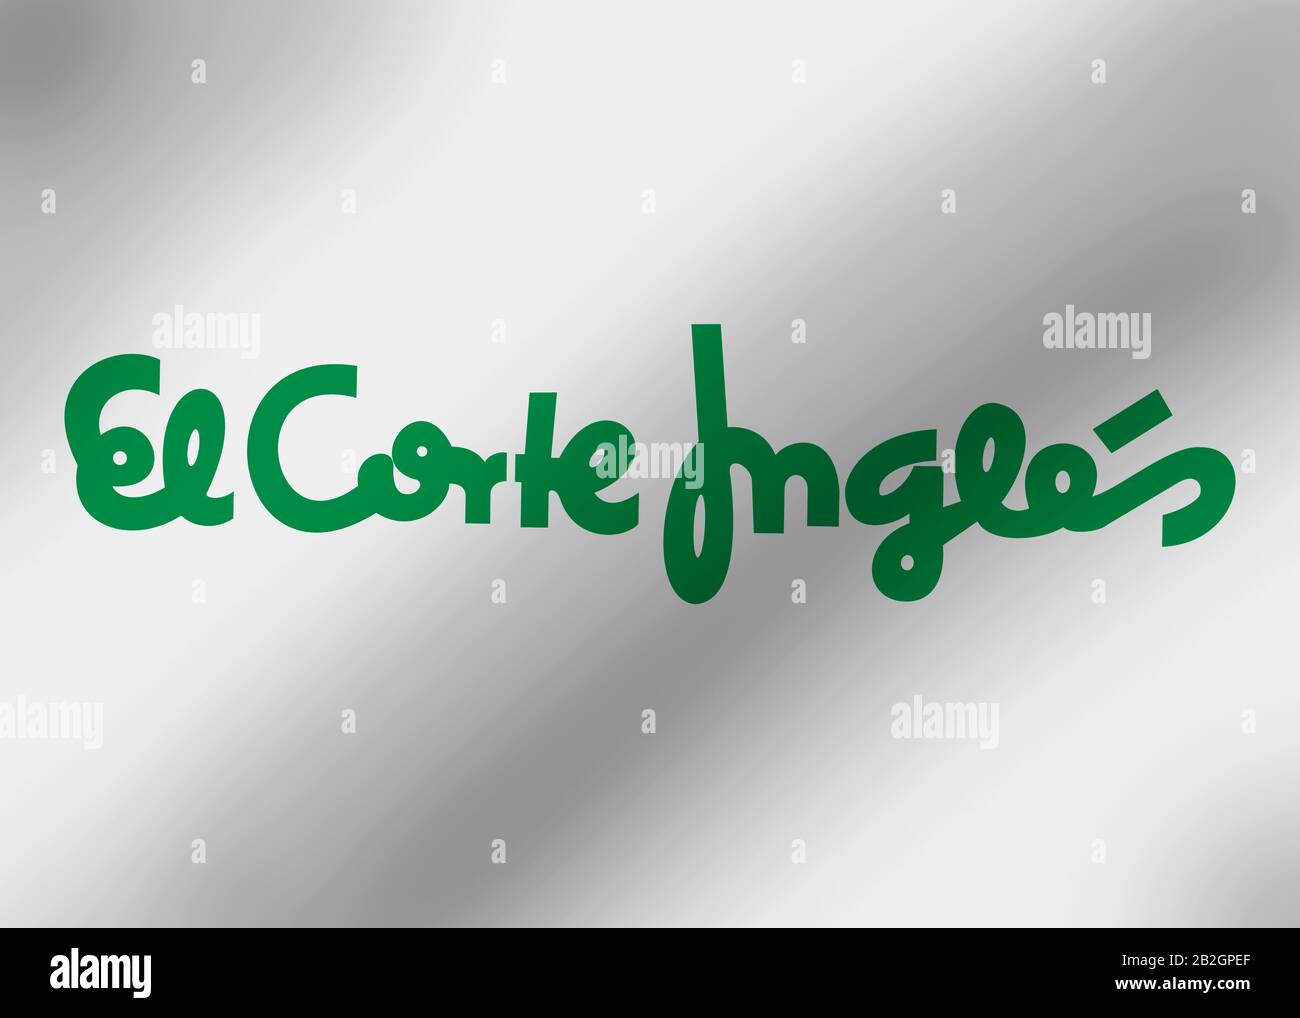 El corte ingles logo Stock Photo - Alamy